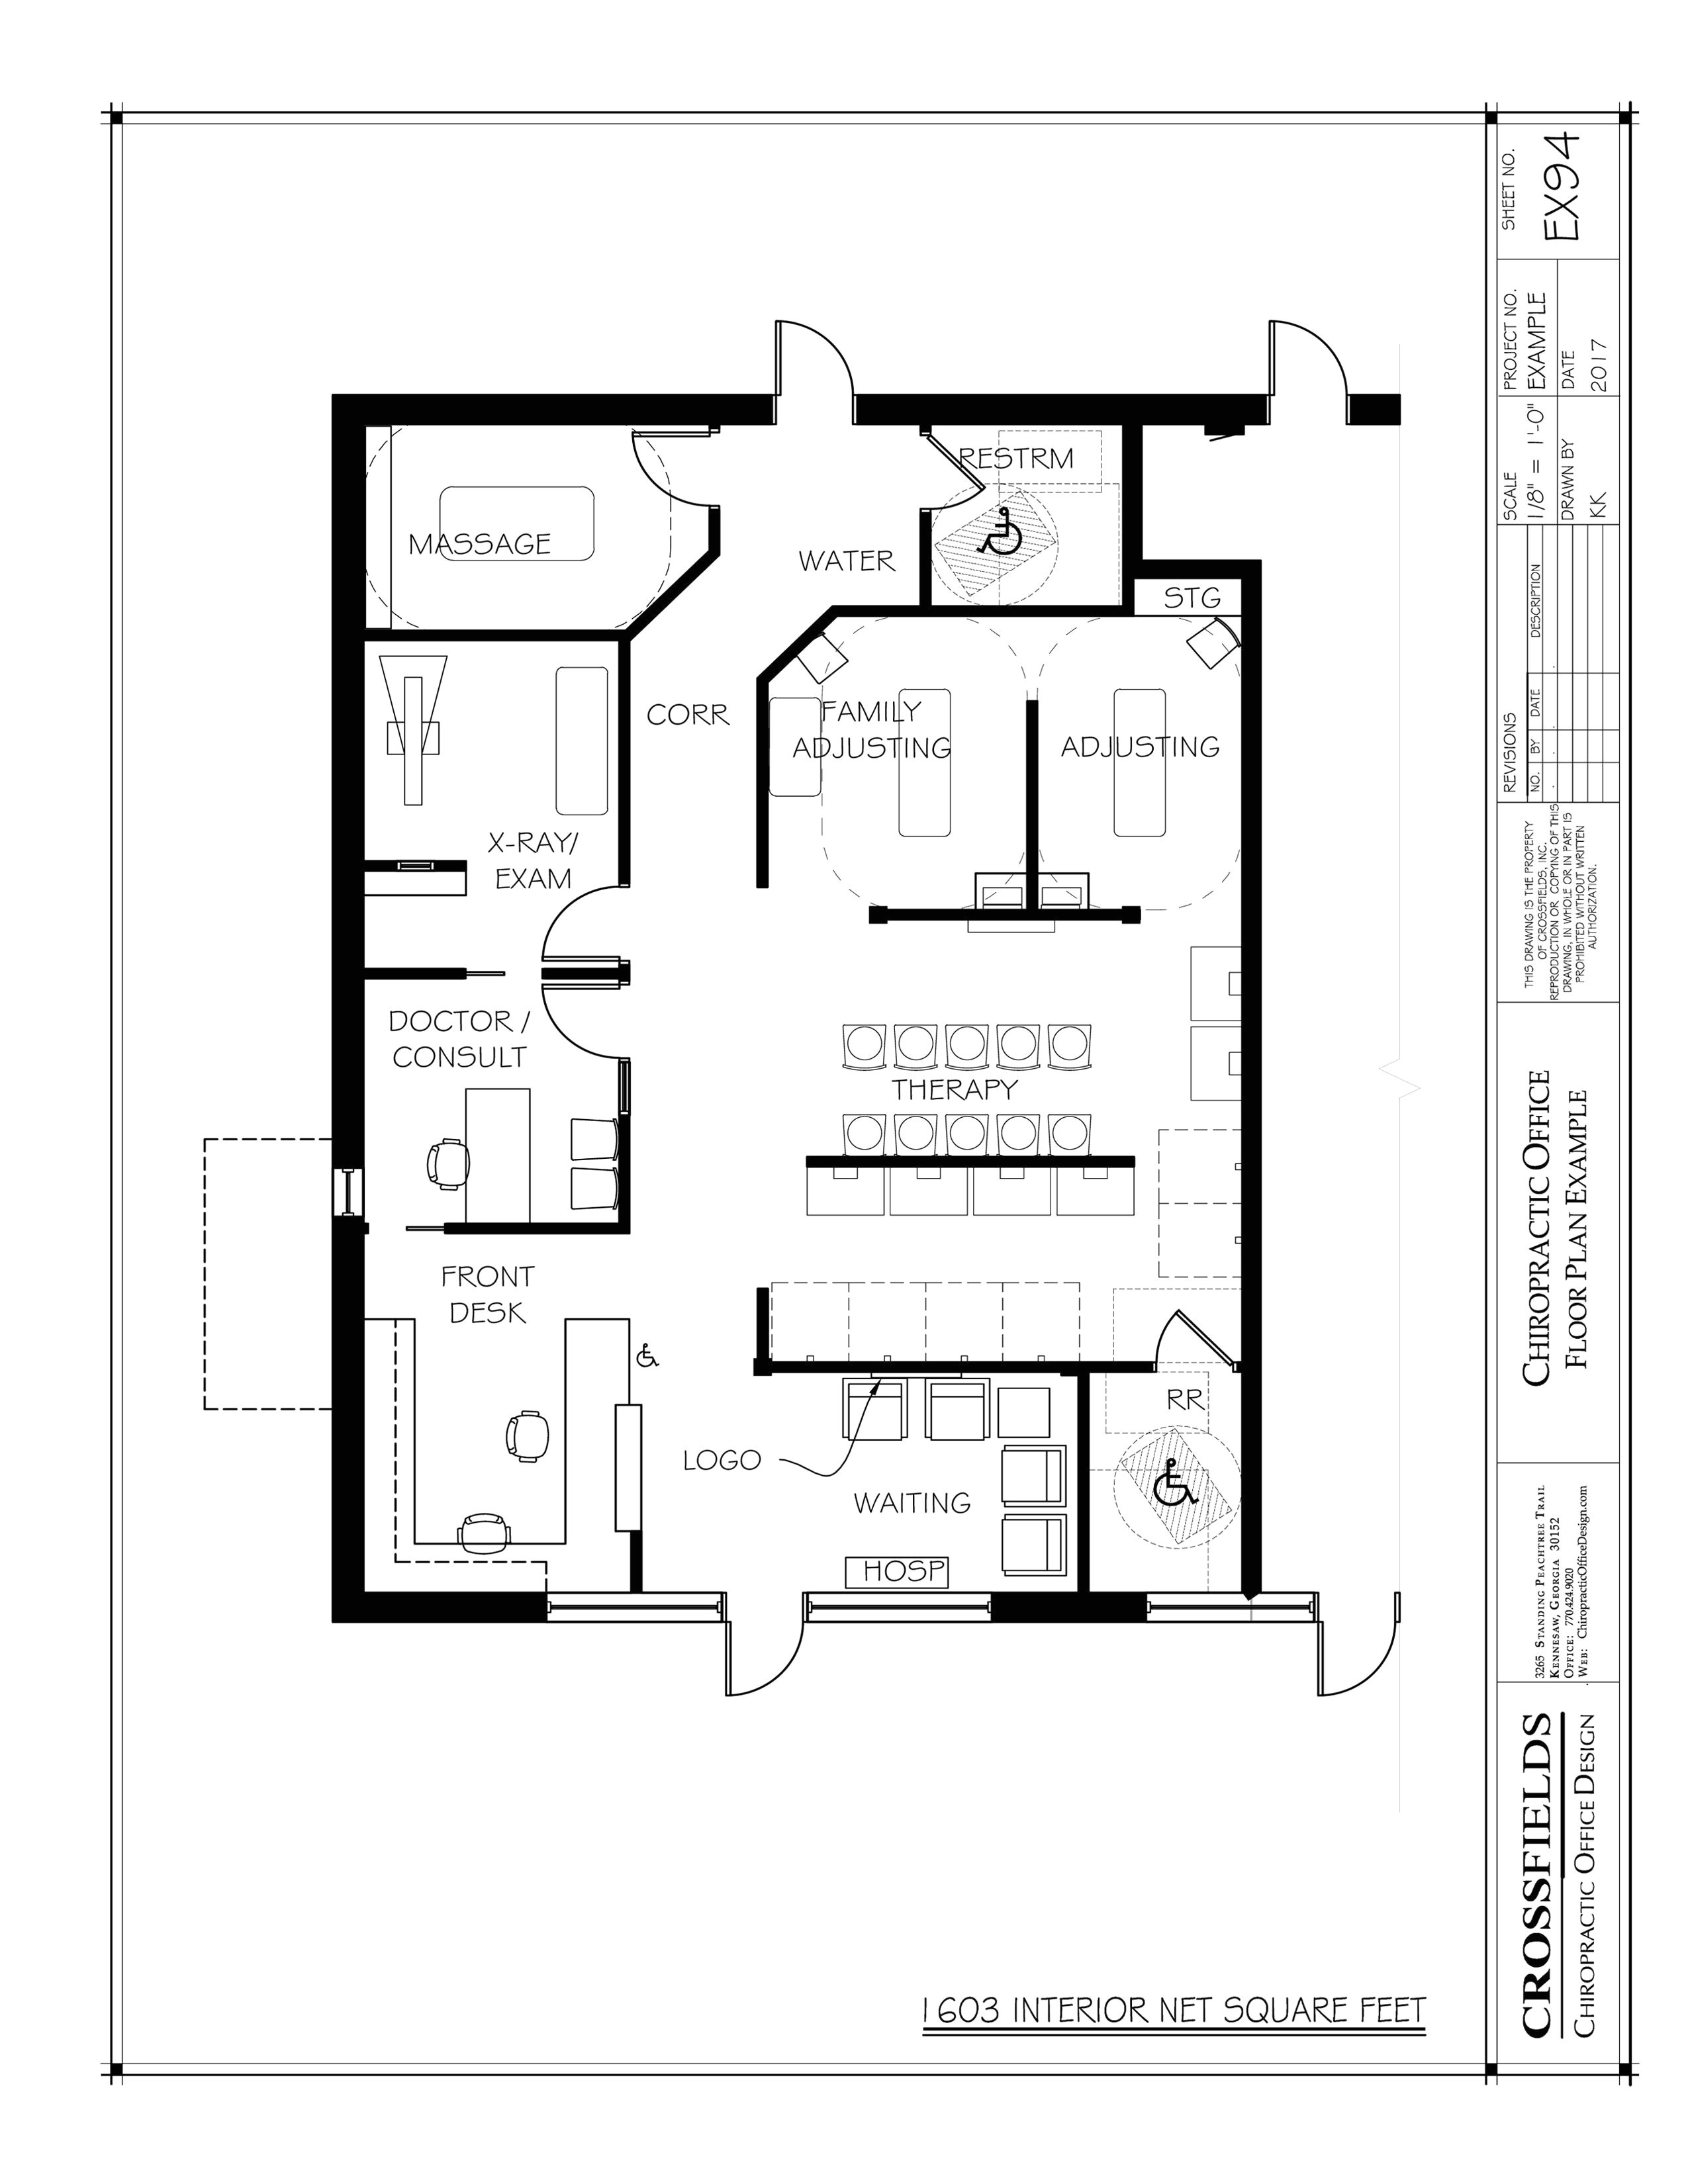 oak creek homes floor plans elegant family home plans luxury workshop floor plans awesome the fice us